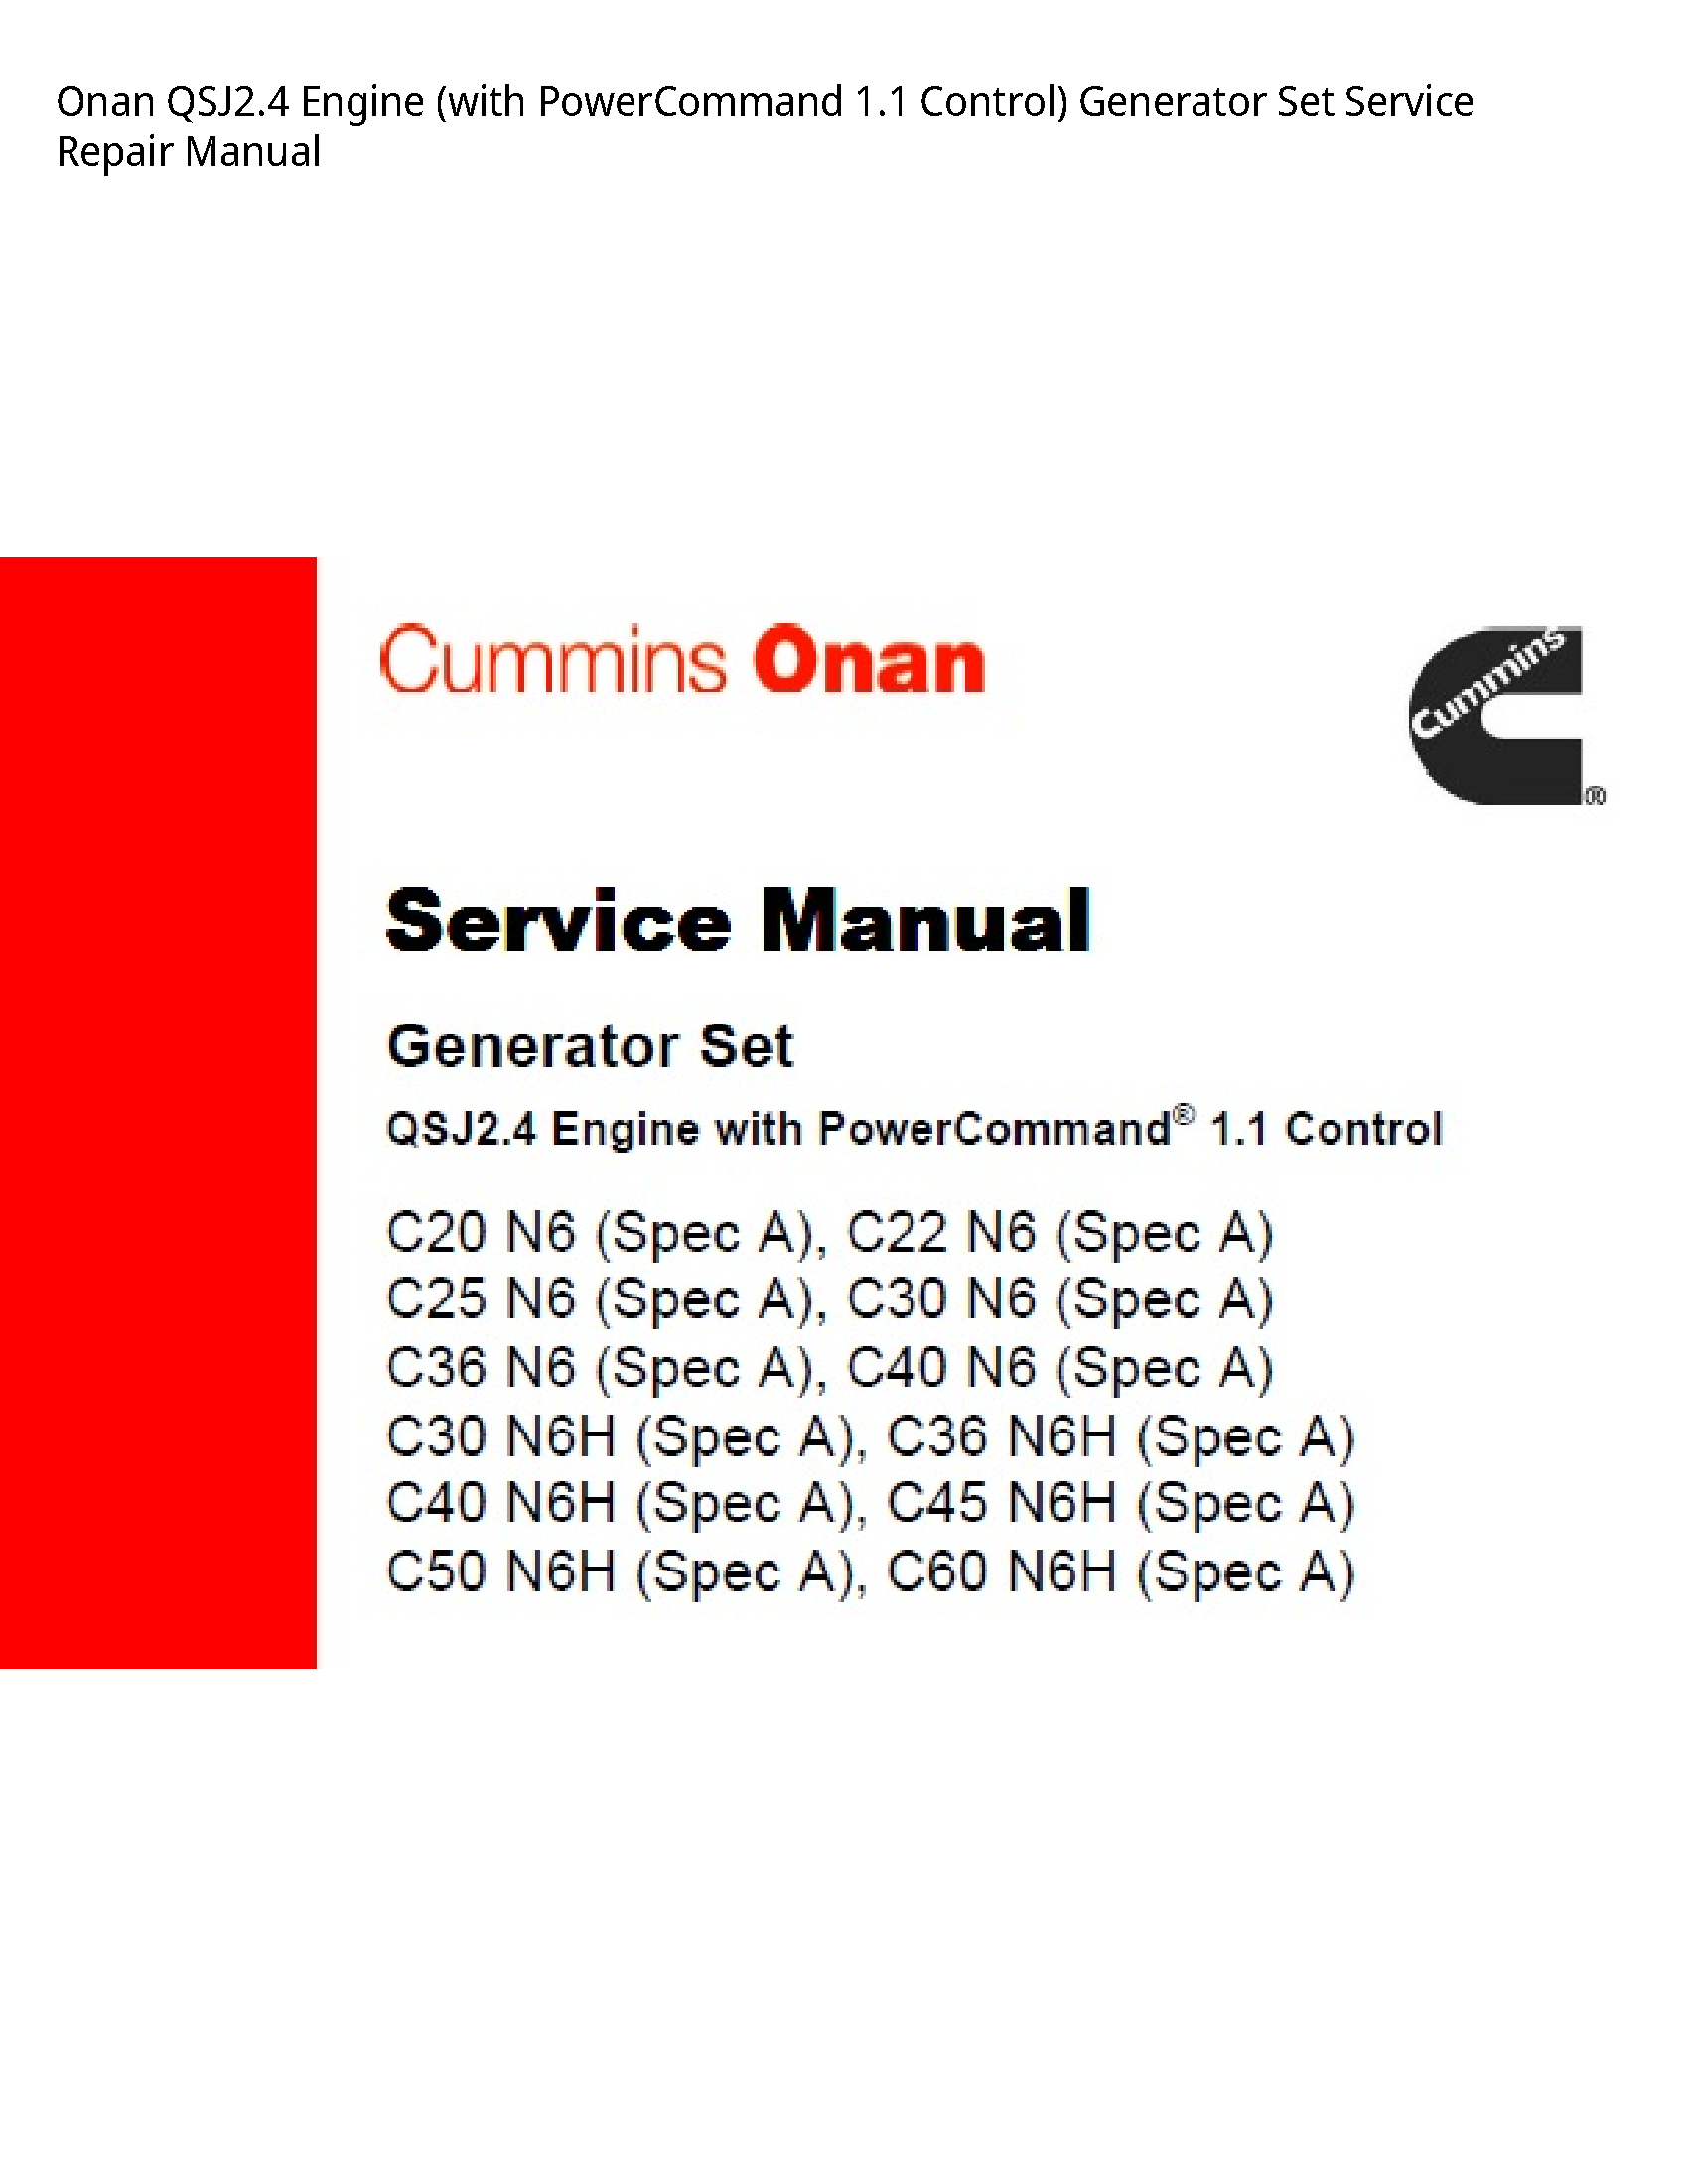 Onan QSJ2.4 Engine (with PowerCommand Control) Generator Set manual